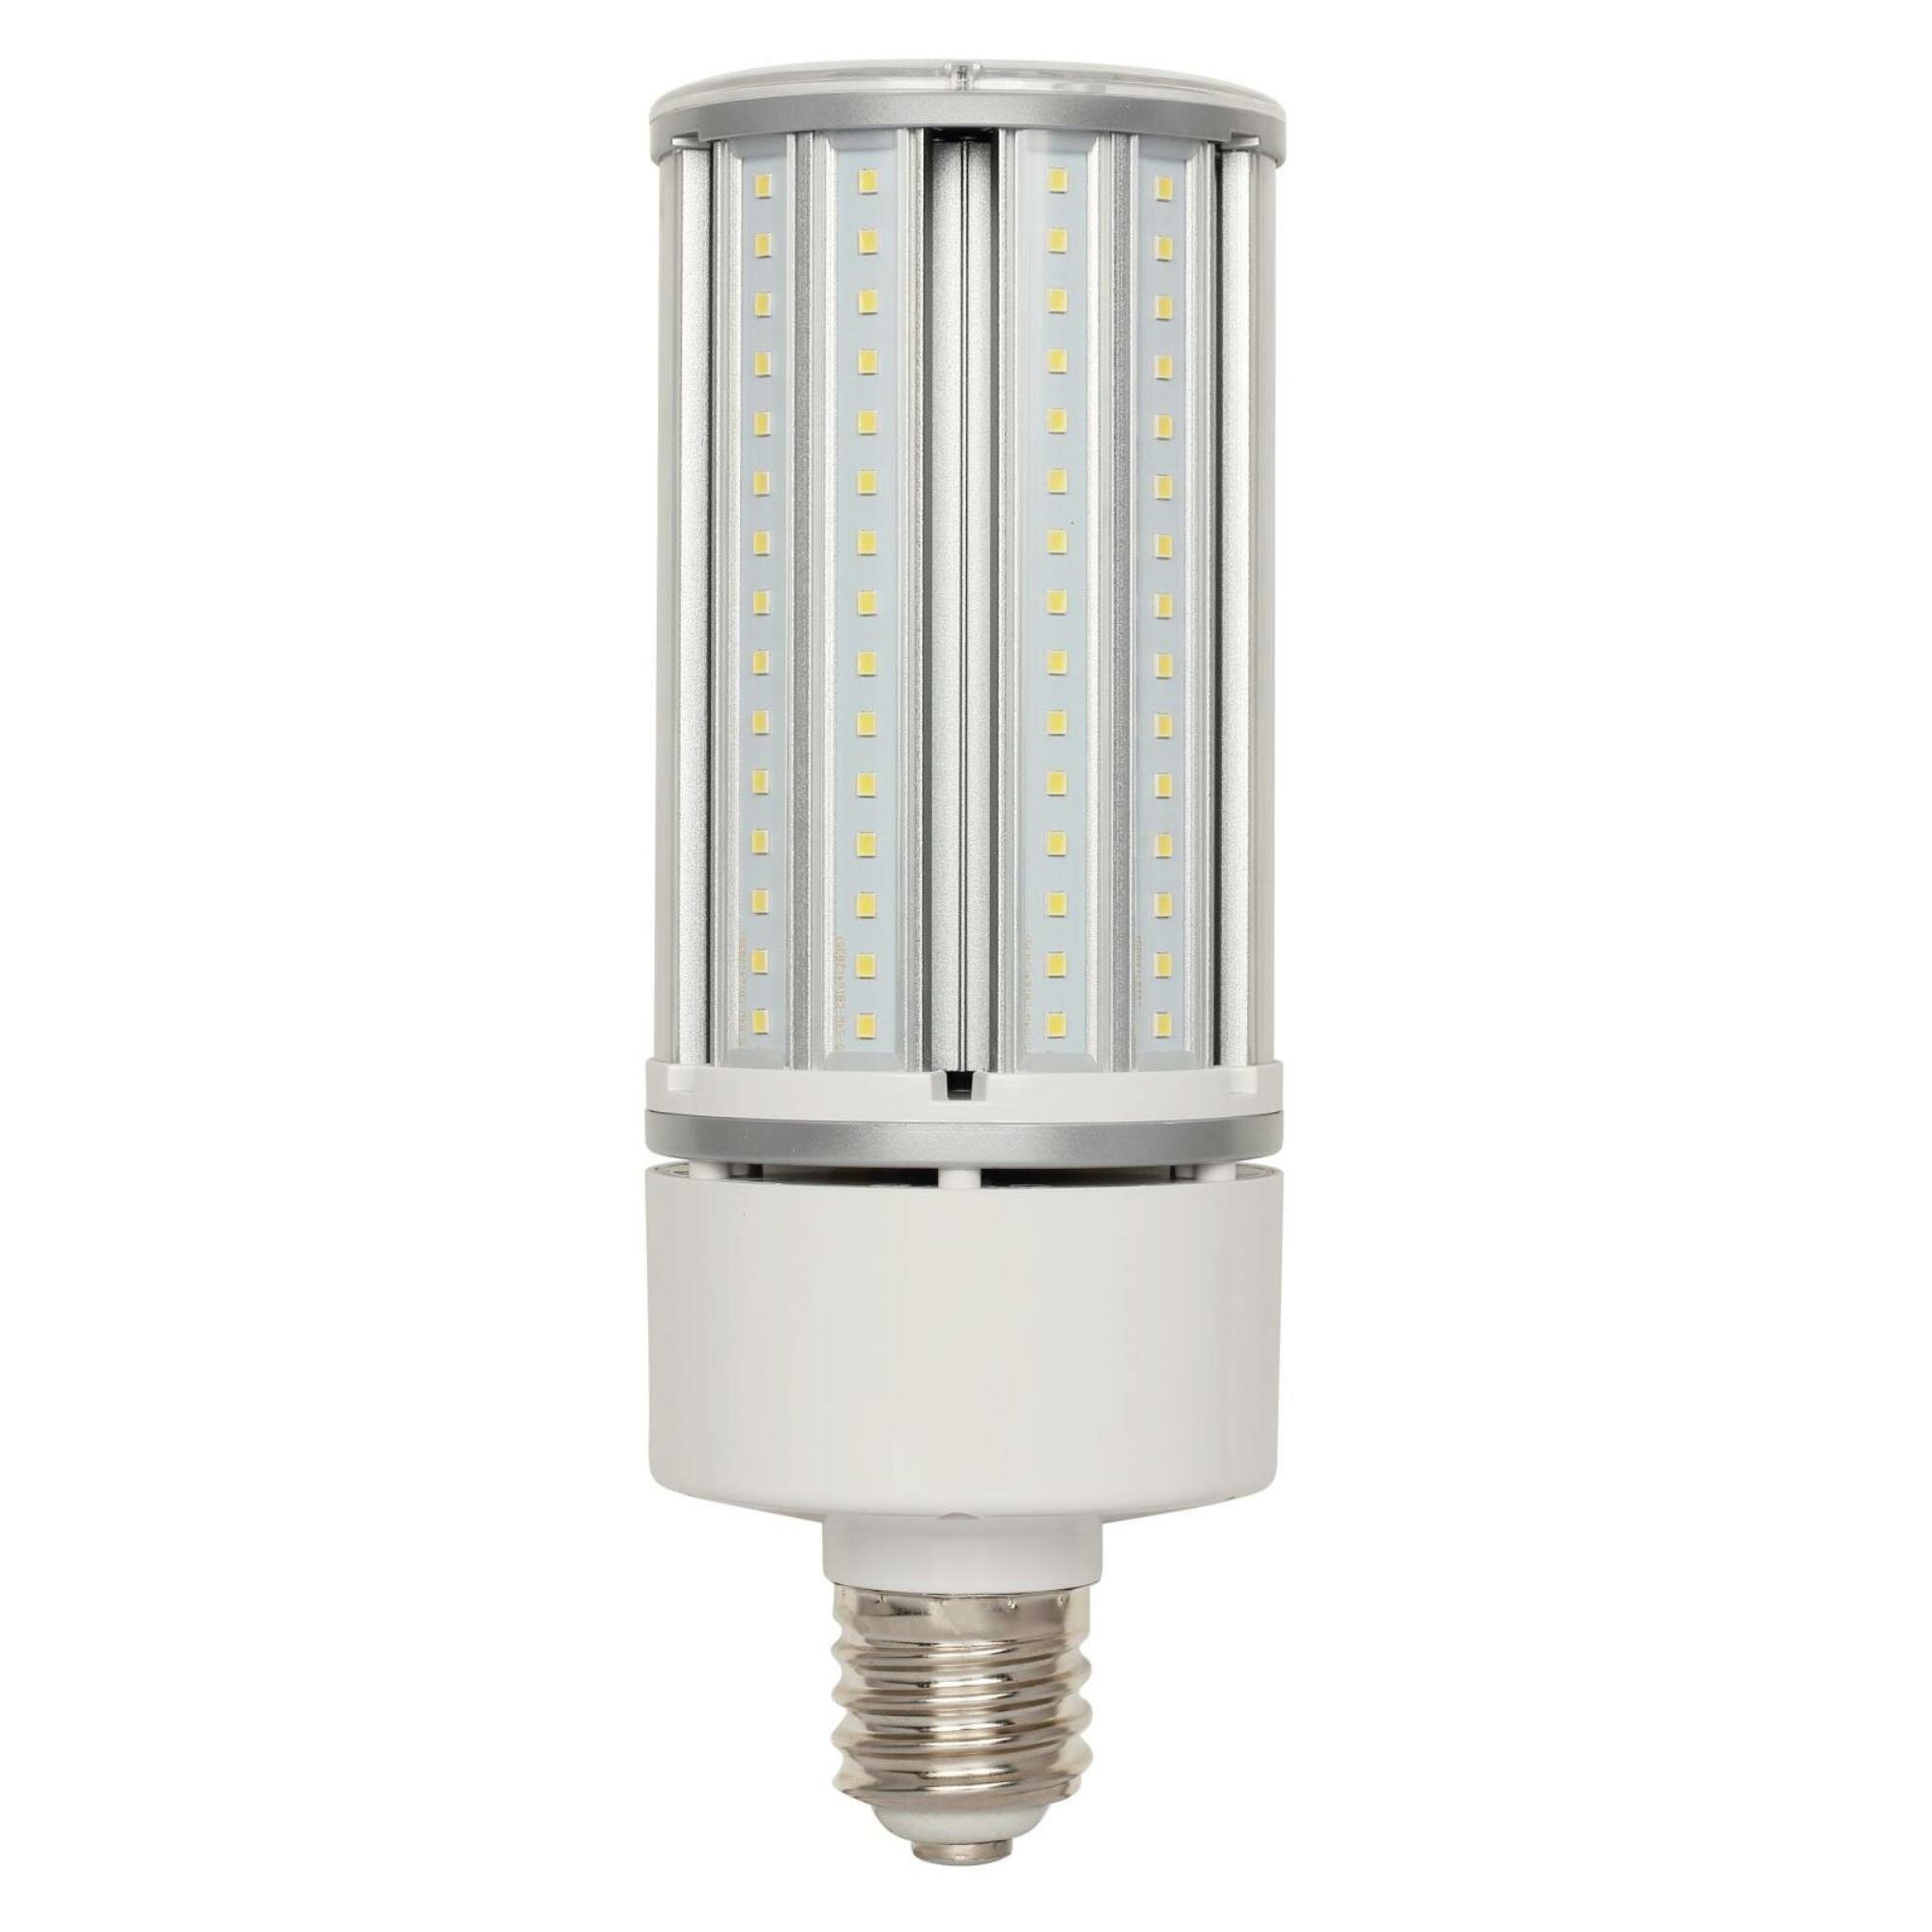 35W Super Bright LED Light Bulb E26 with E39 Mogul Base Adapter LED Bulb Daylight 250 Watt Equivalent 6500K 3800Lm Brightest Corn Row Light Bulb for Garage Warehouse Commercial Ceiling Factory Barn 